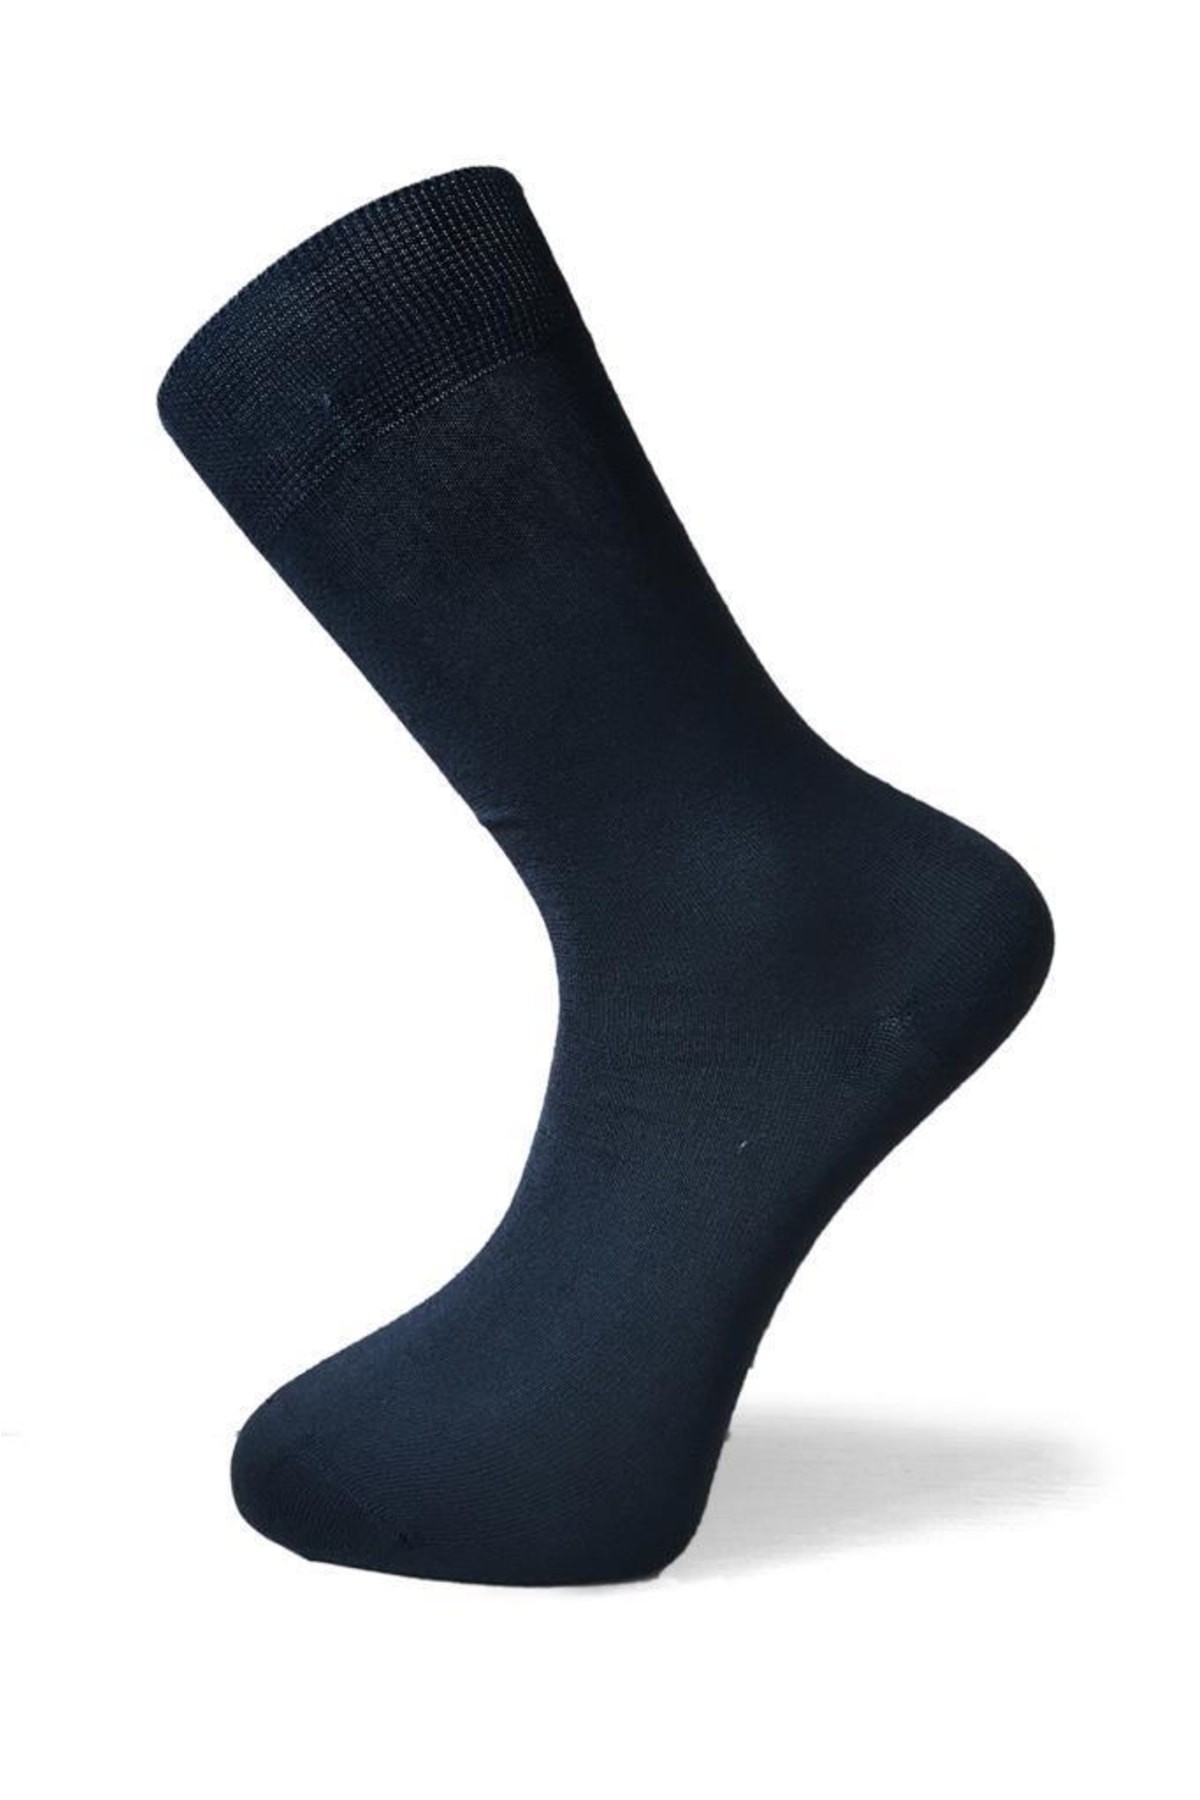 Akala 6'lı Bambu Akdeniz Model Erkek Soket Çorap 